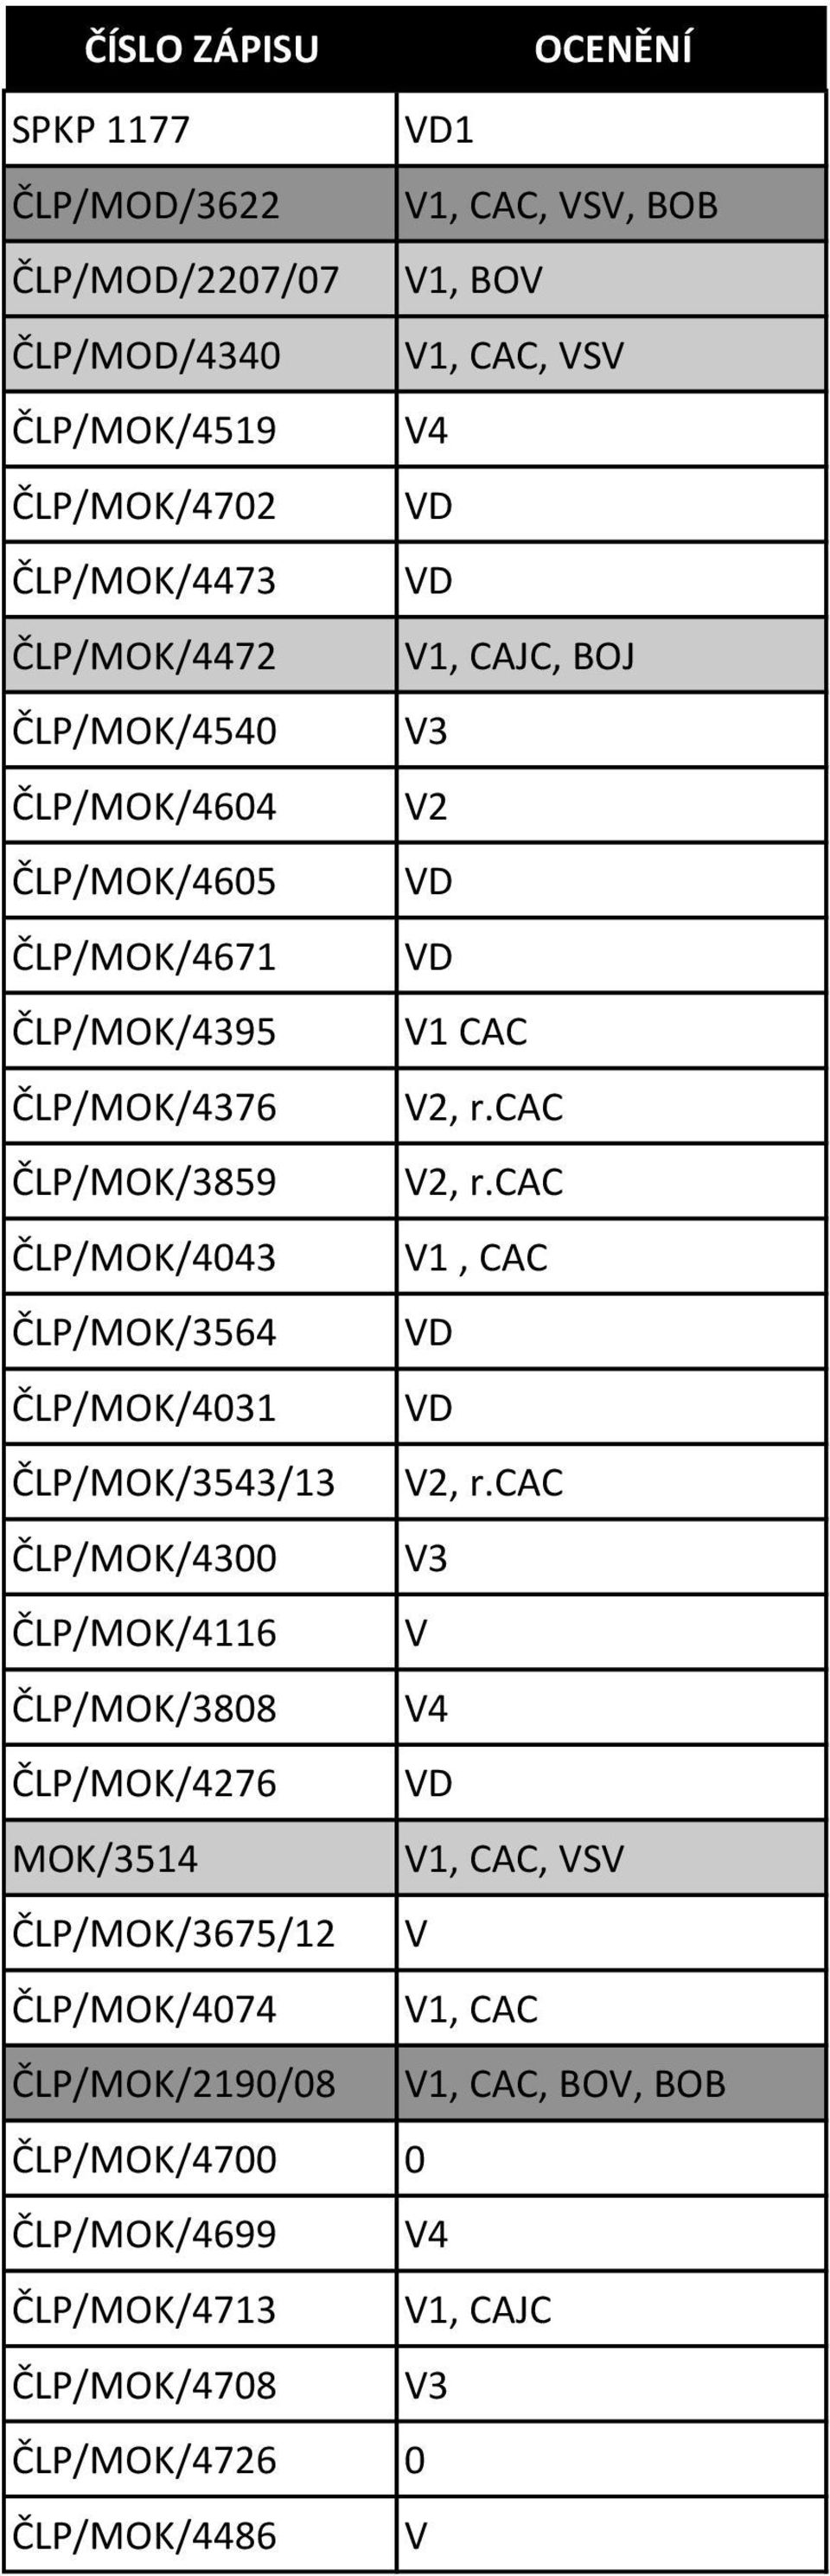 cac ČLP/MOK/4043 V1, CAC ČLP/MOK/3564 VD ČLP/MOK/4031 VD ČLP/MOK/3543/13 V2, r.